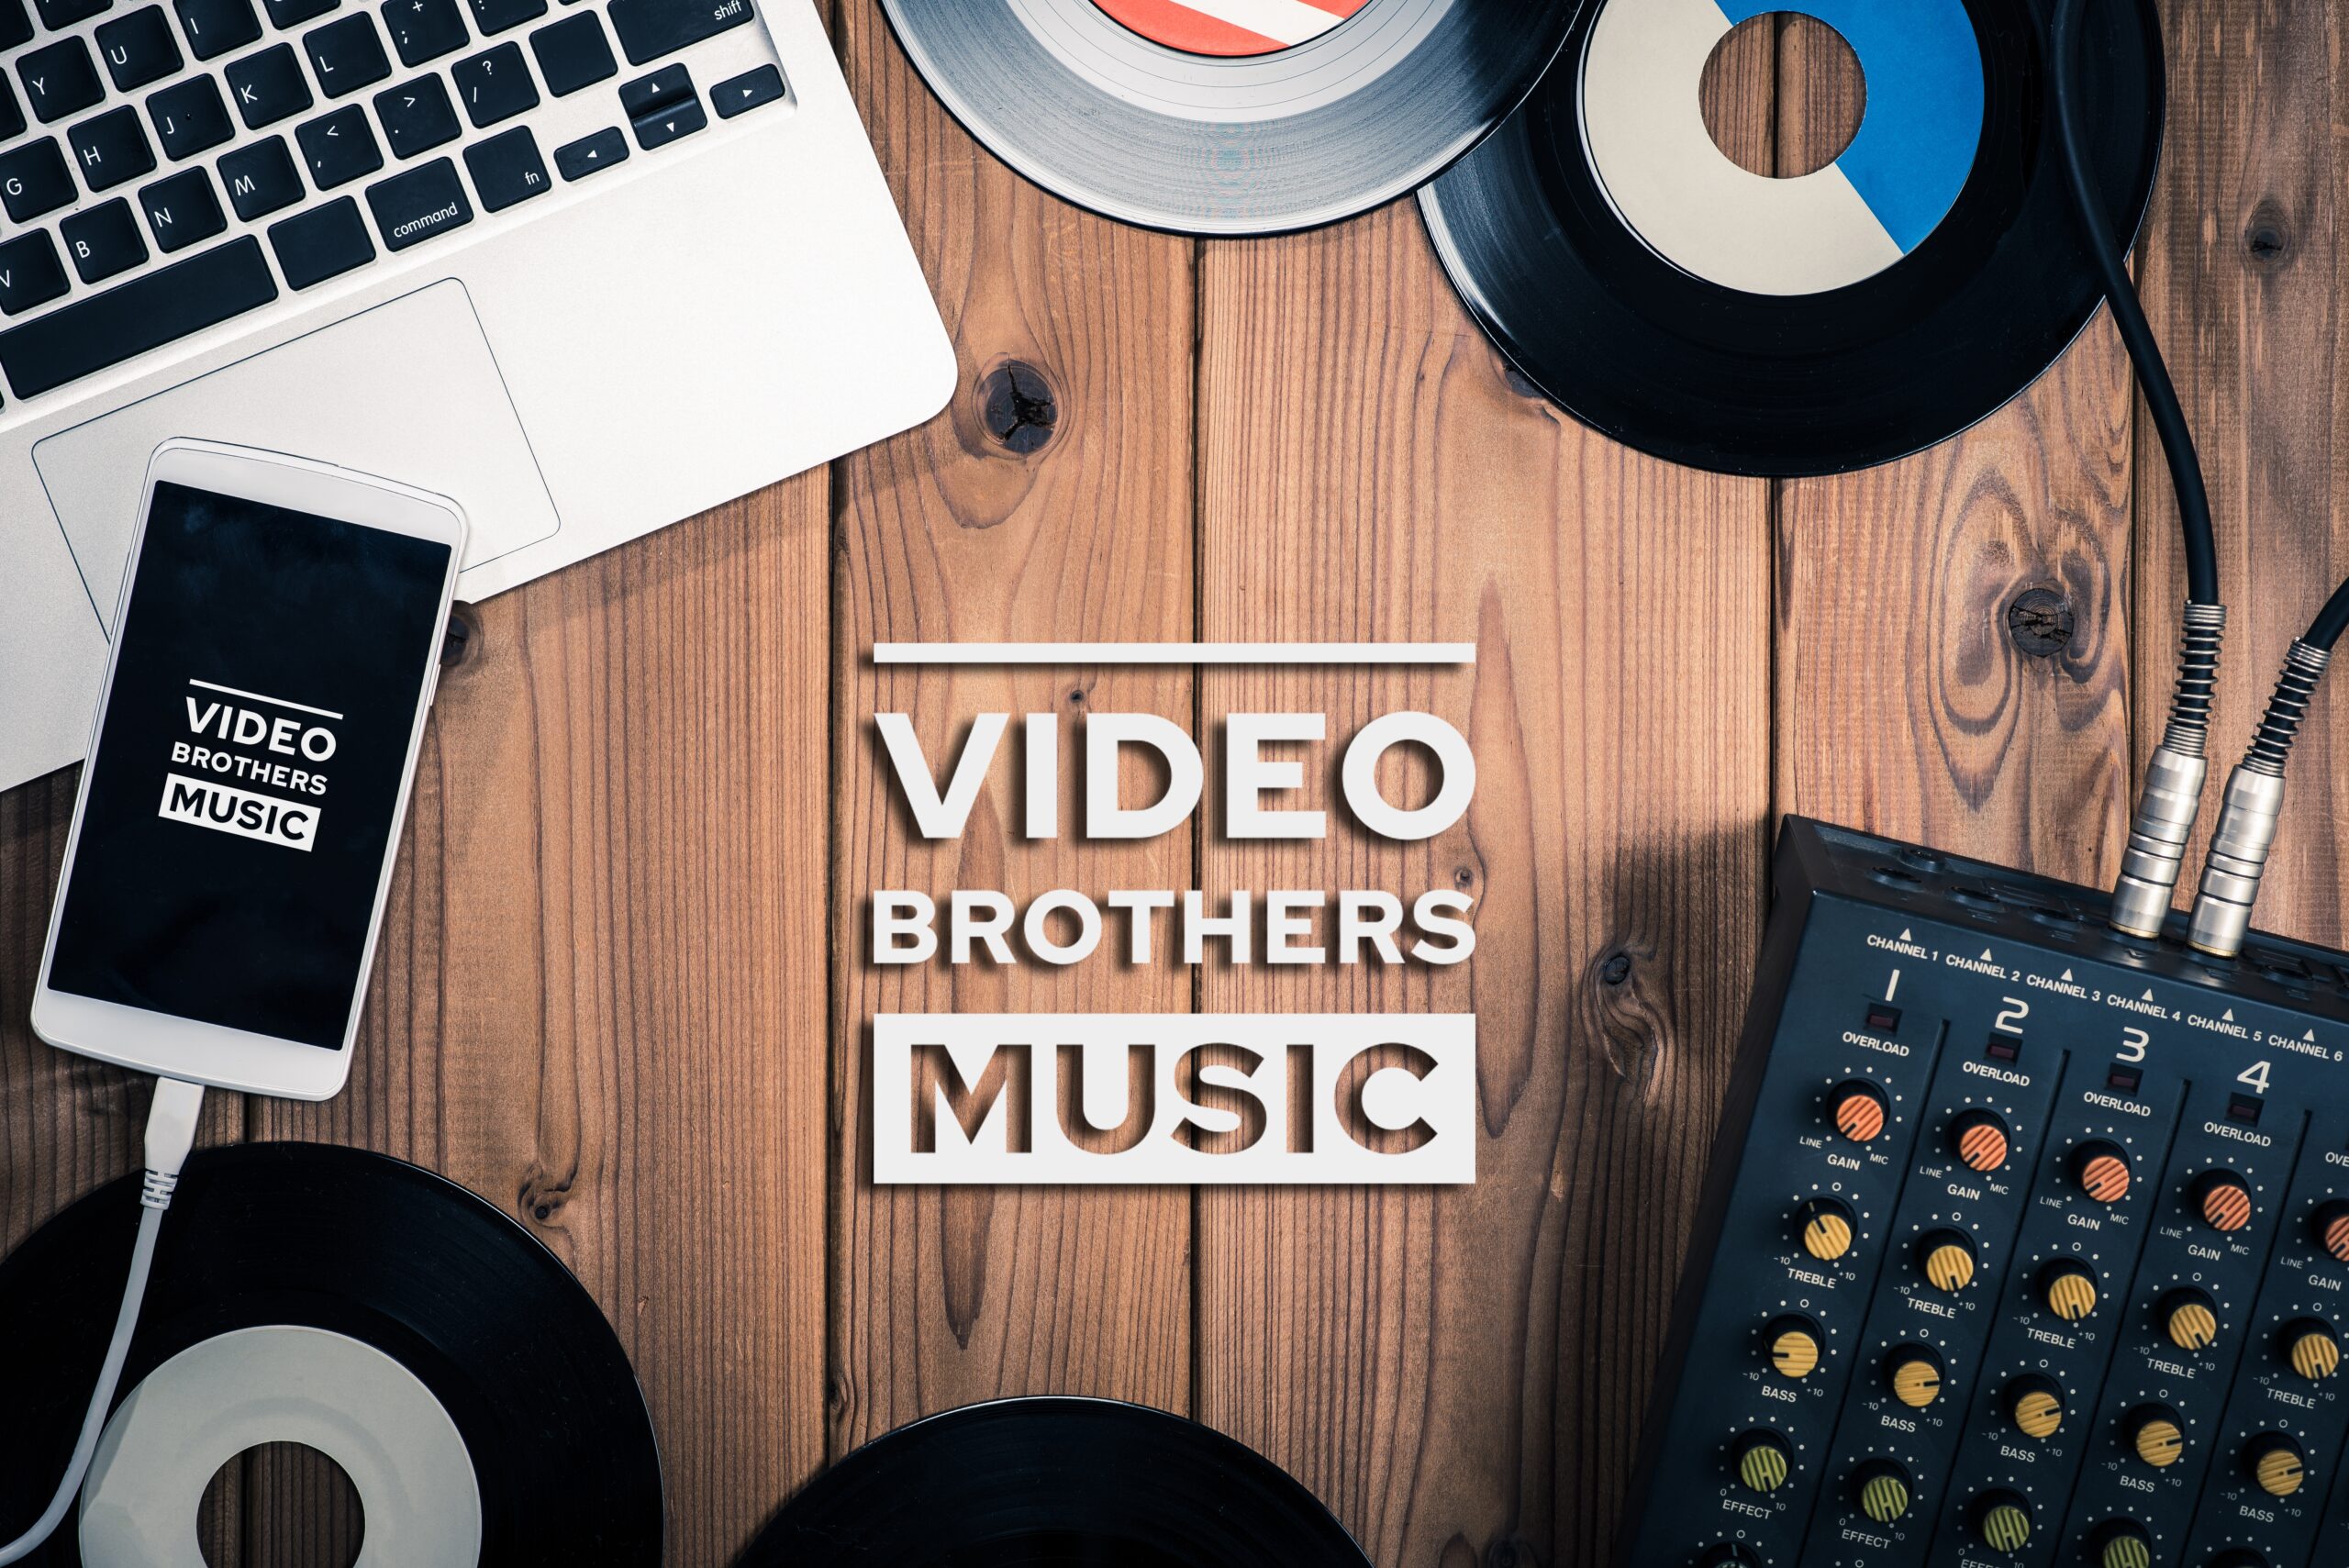 Video Brothers Music - strona główna